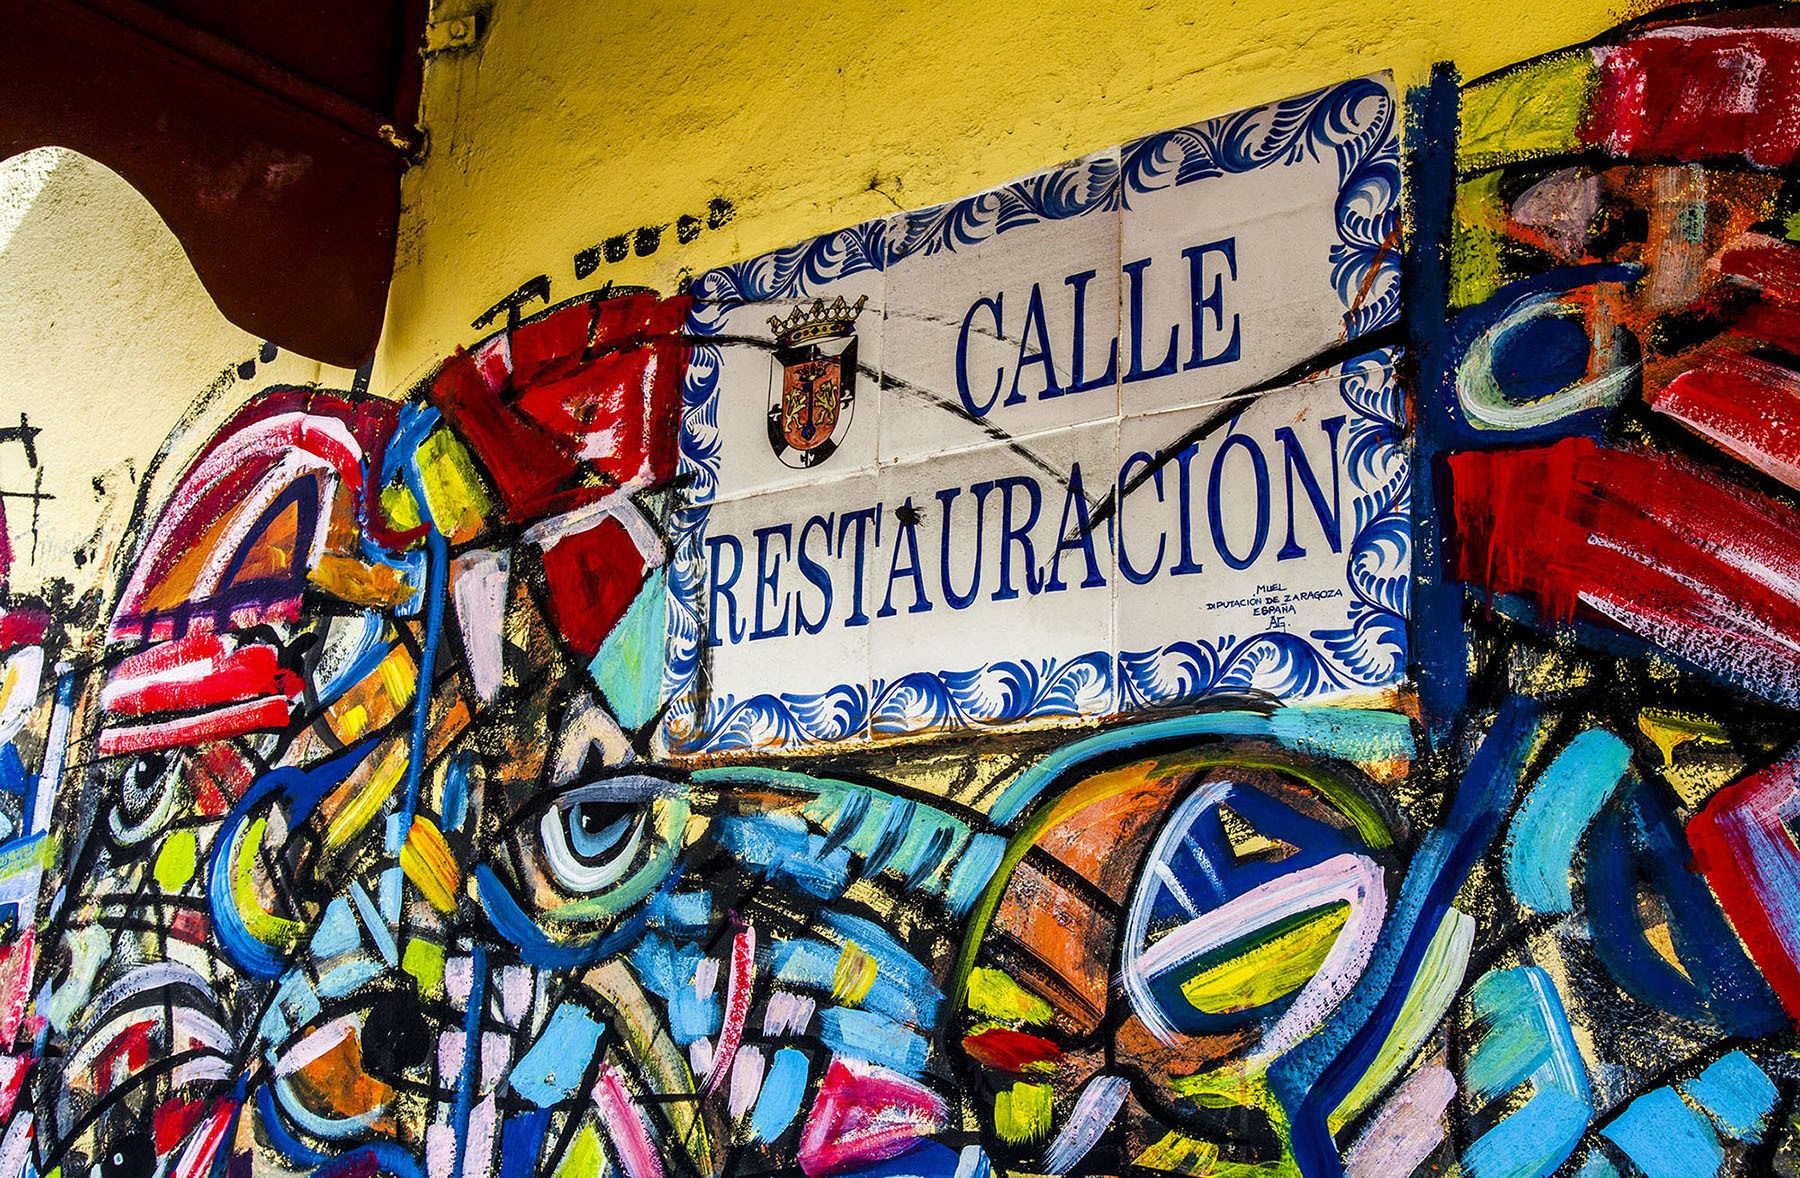 A colourful wall and street sign along Calle Restauracion Santo Domingo Dominican Republic